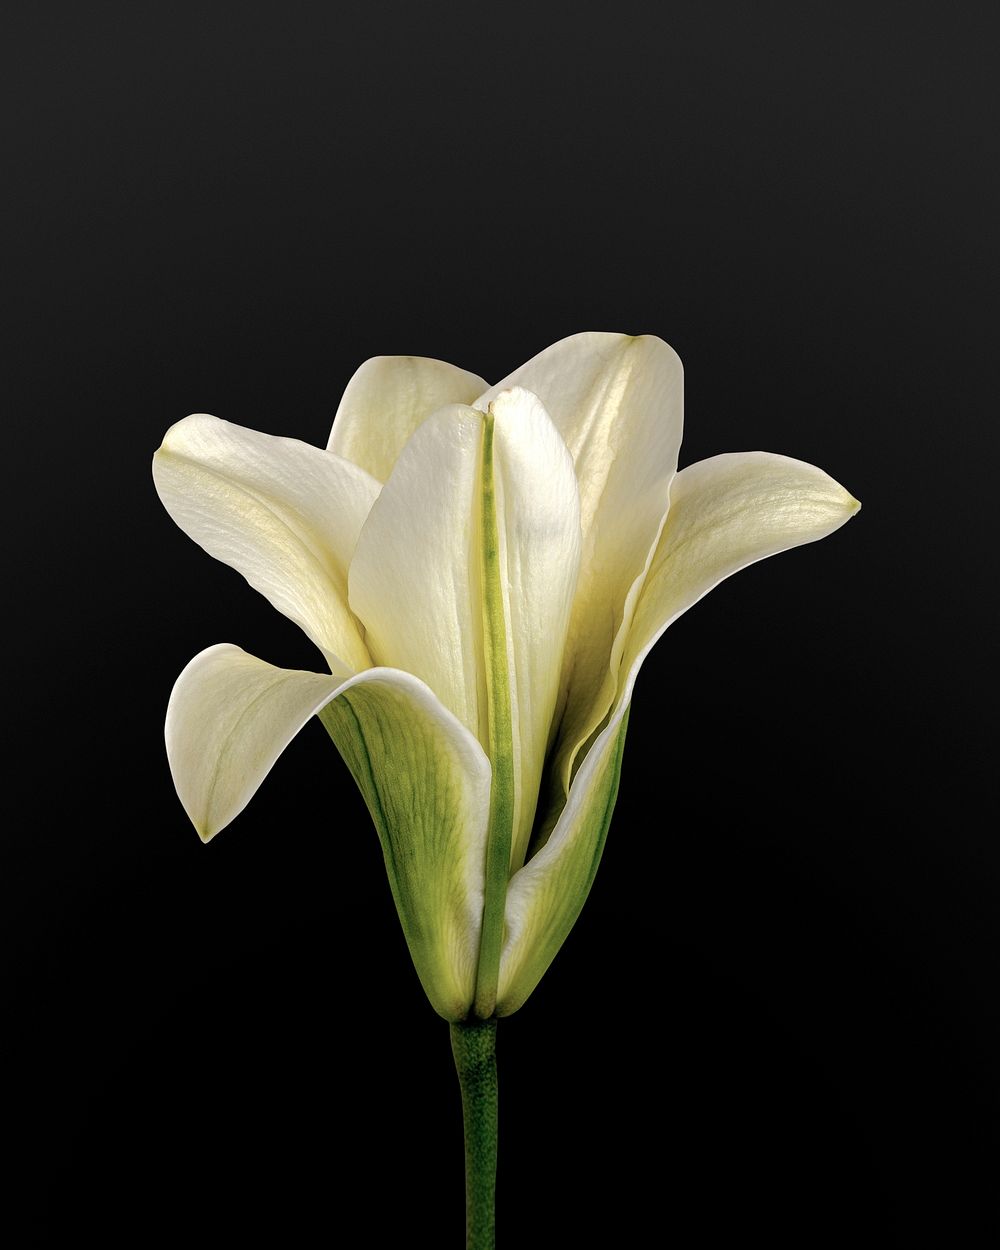 White lily flower, black background